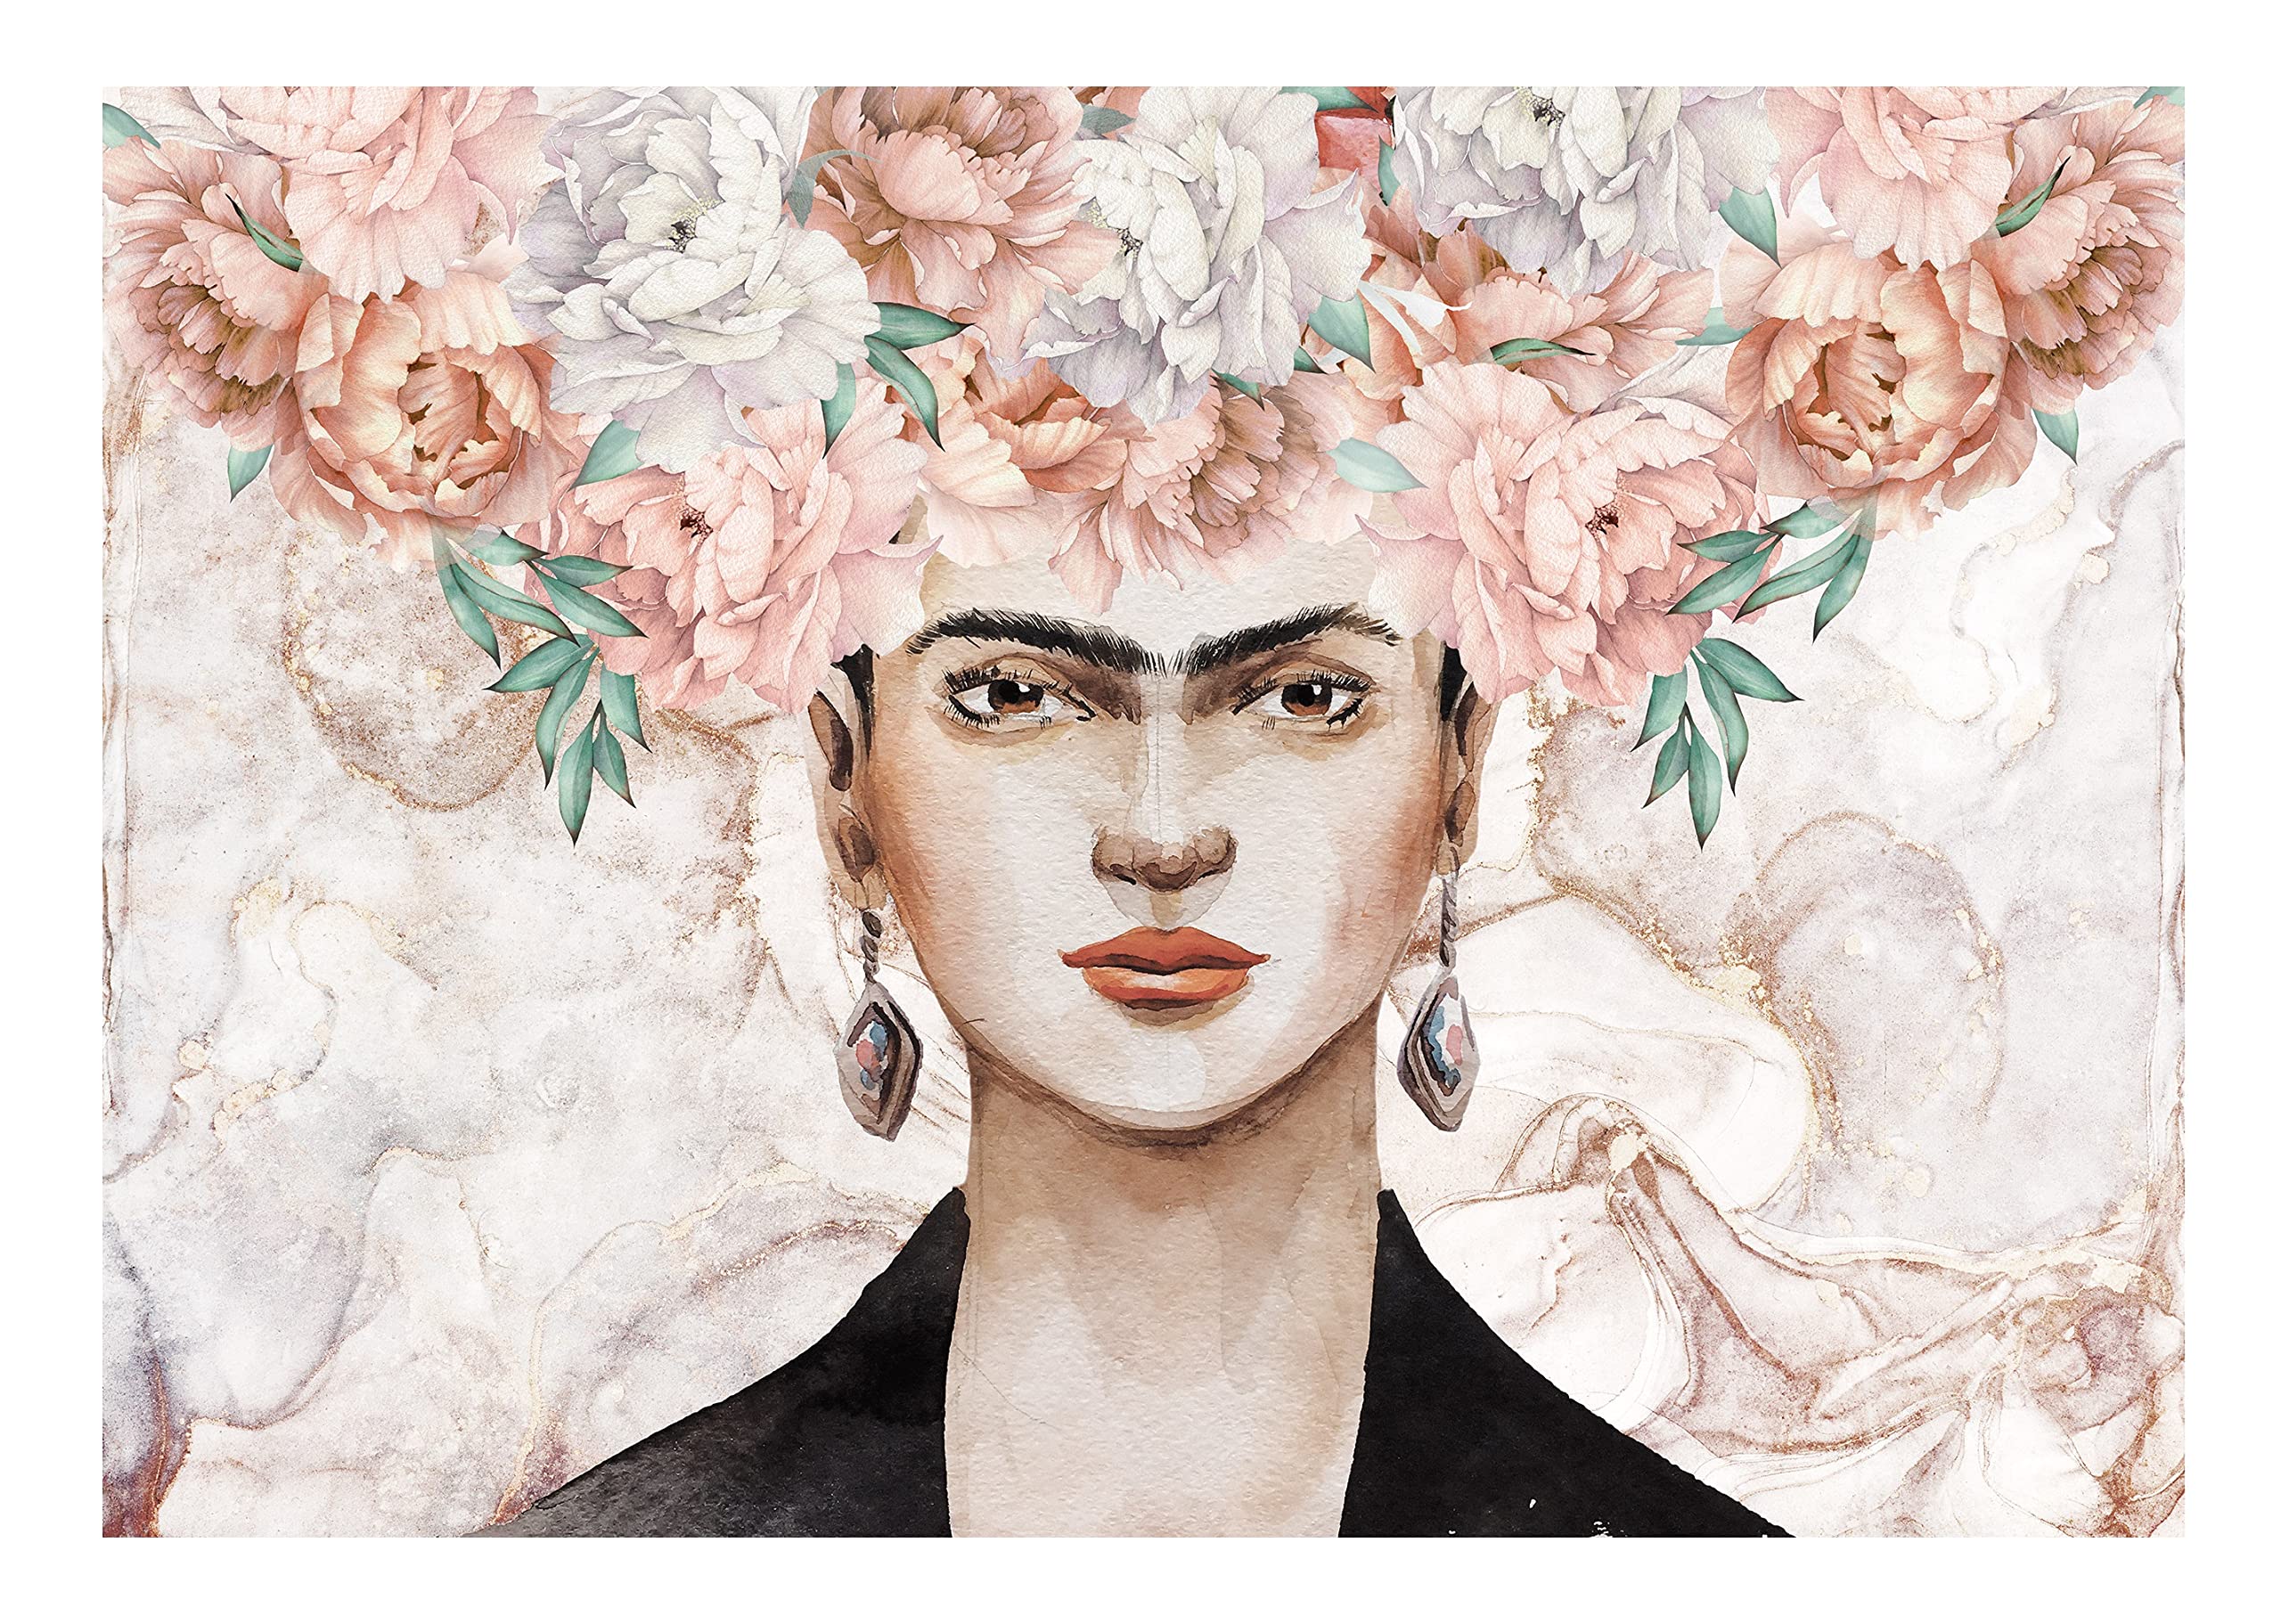 Photo Wallpaper Frida Kahlo Pink Peony. Do not mention downloads or free downloads - Frida Kahlo